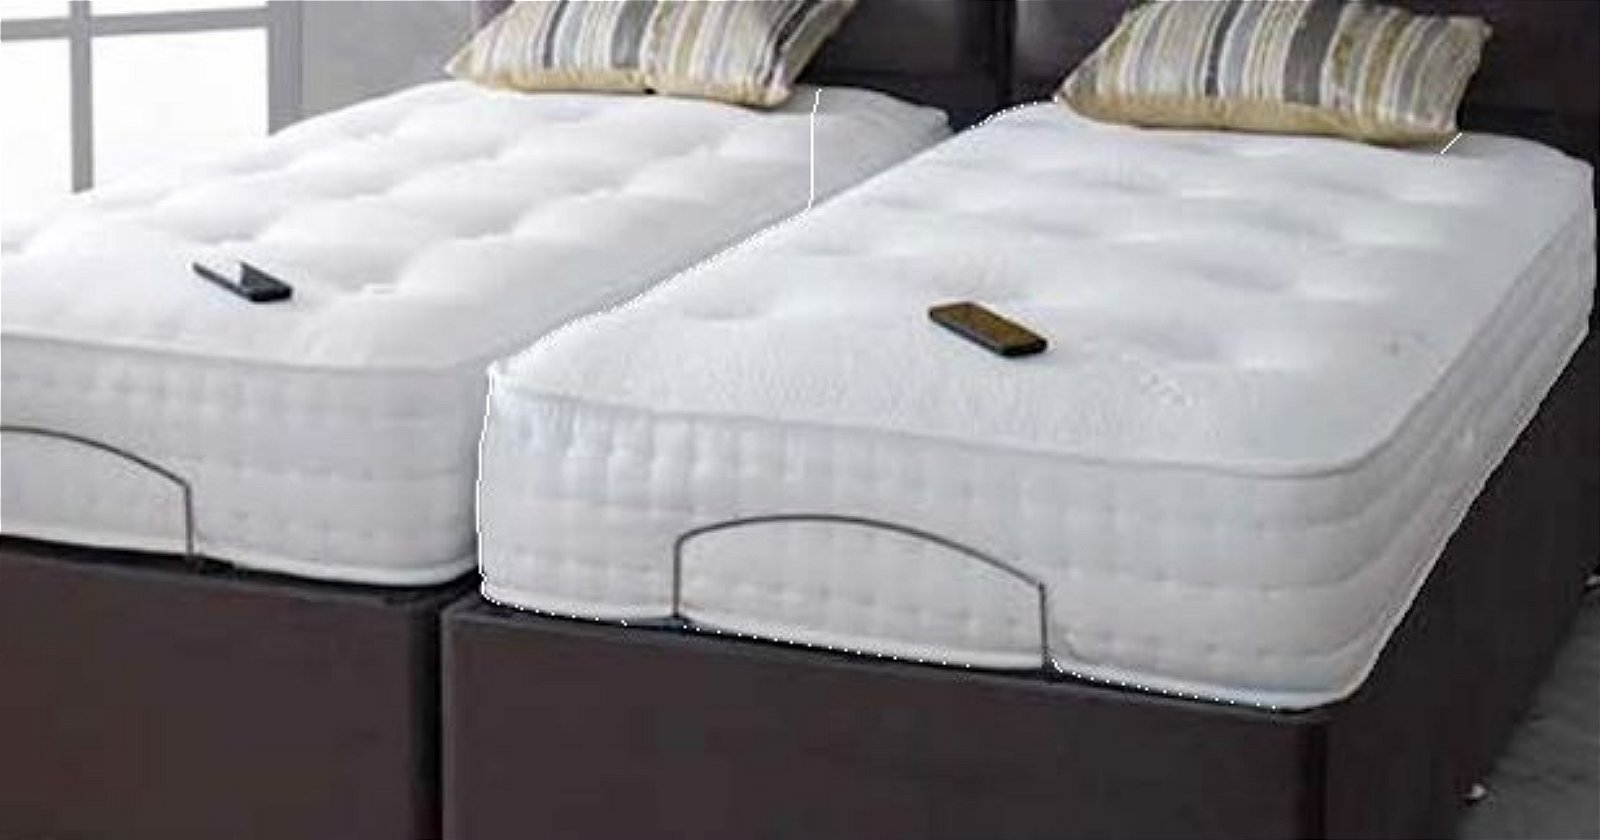 highgrove strathmore 1000 mattress review